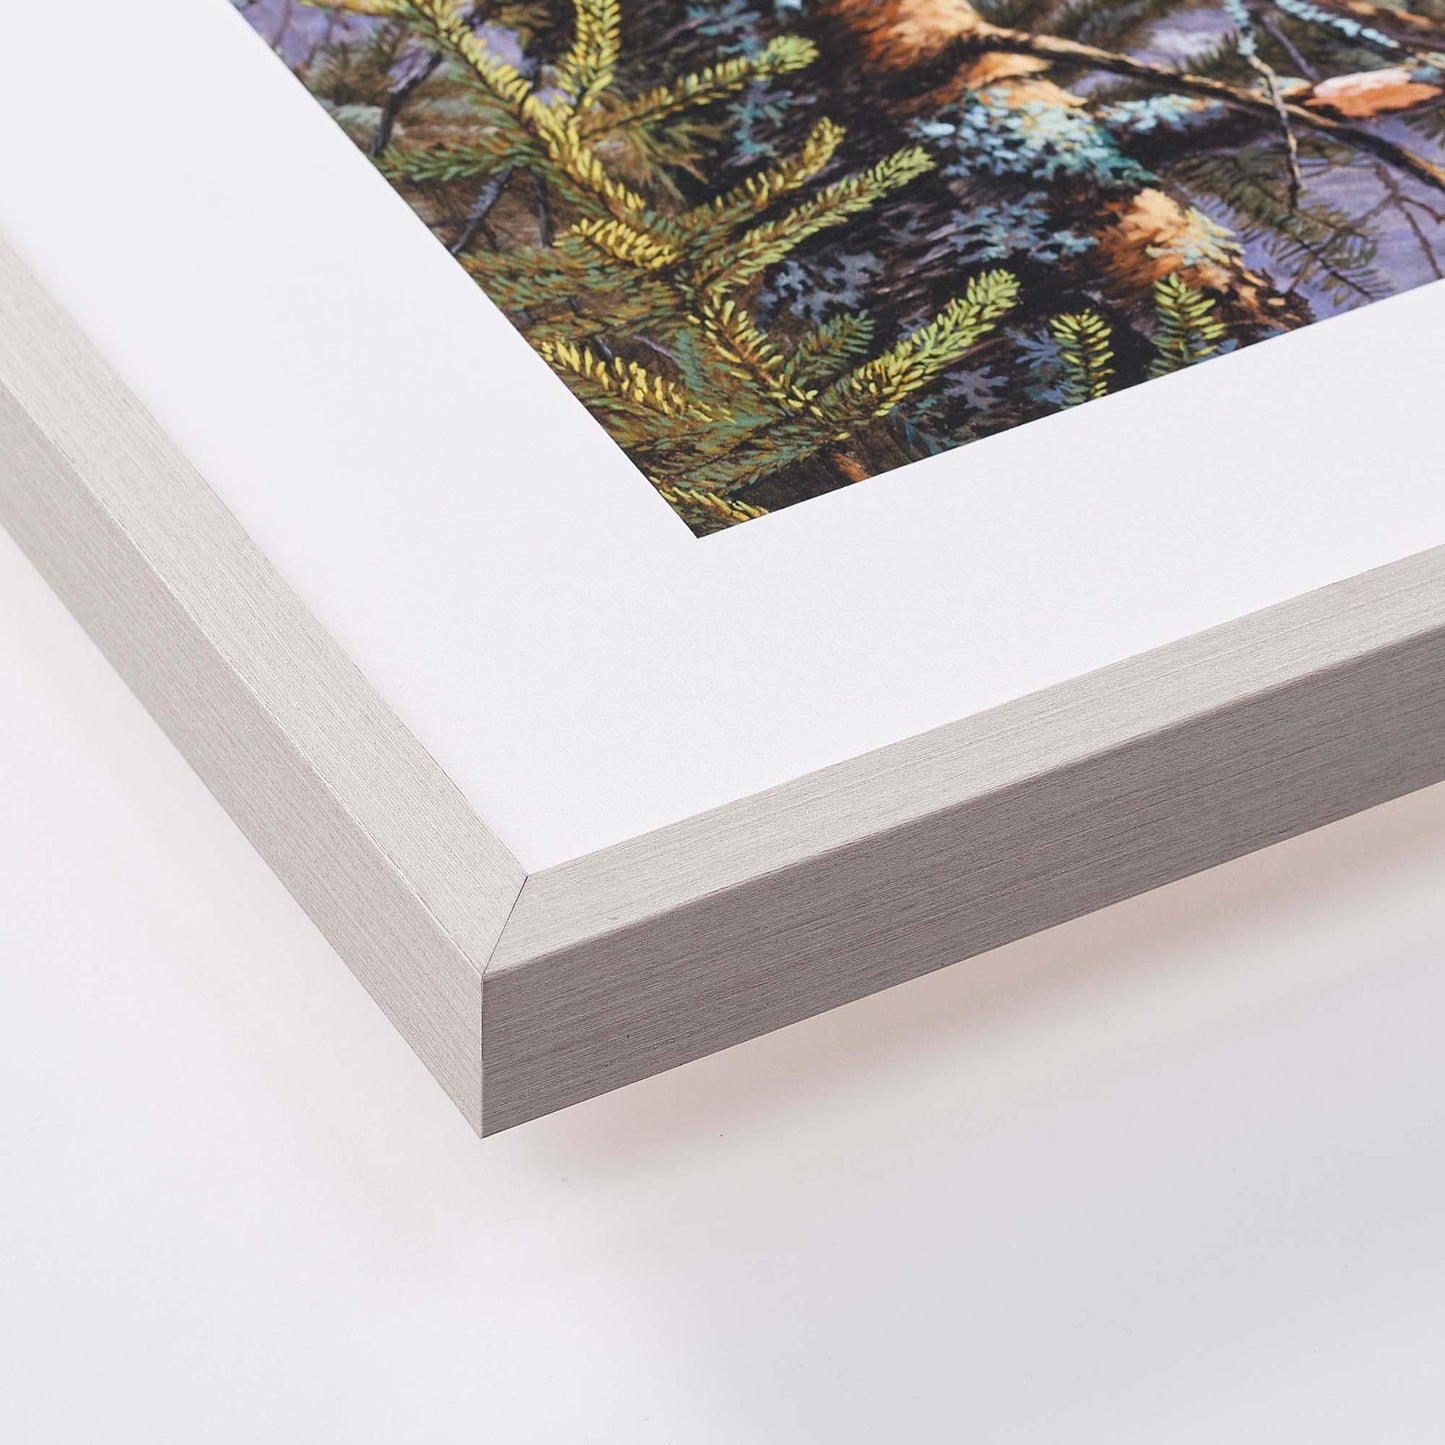 Fox at Evening—Bridger Creek Limited Edition Paper Print - Wild Wings